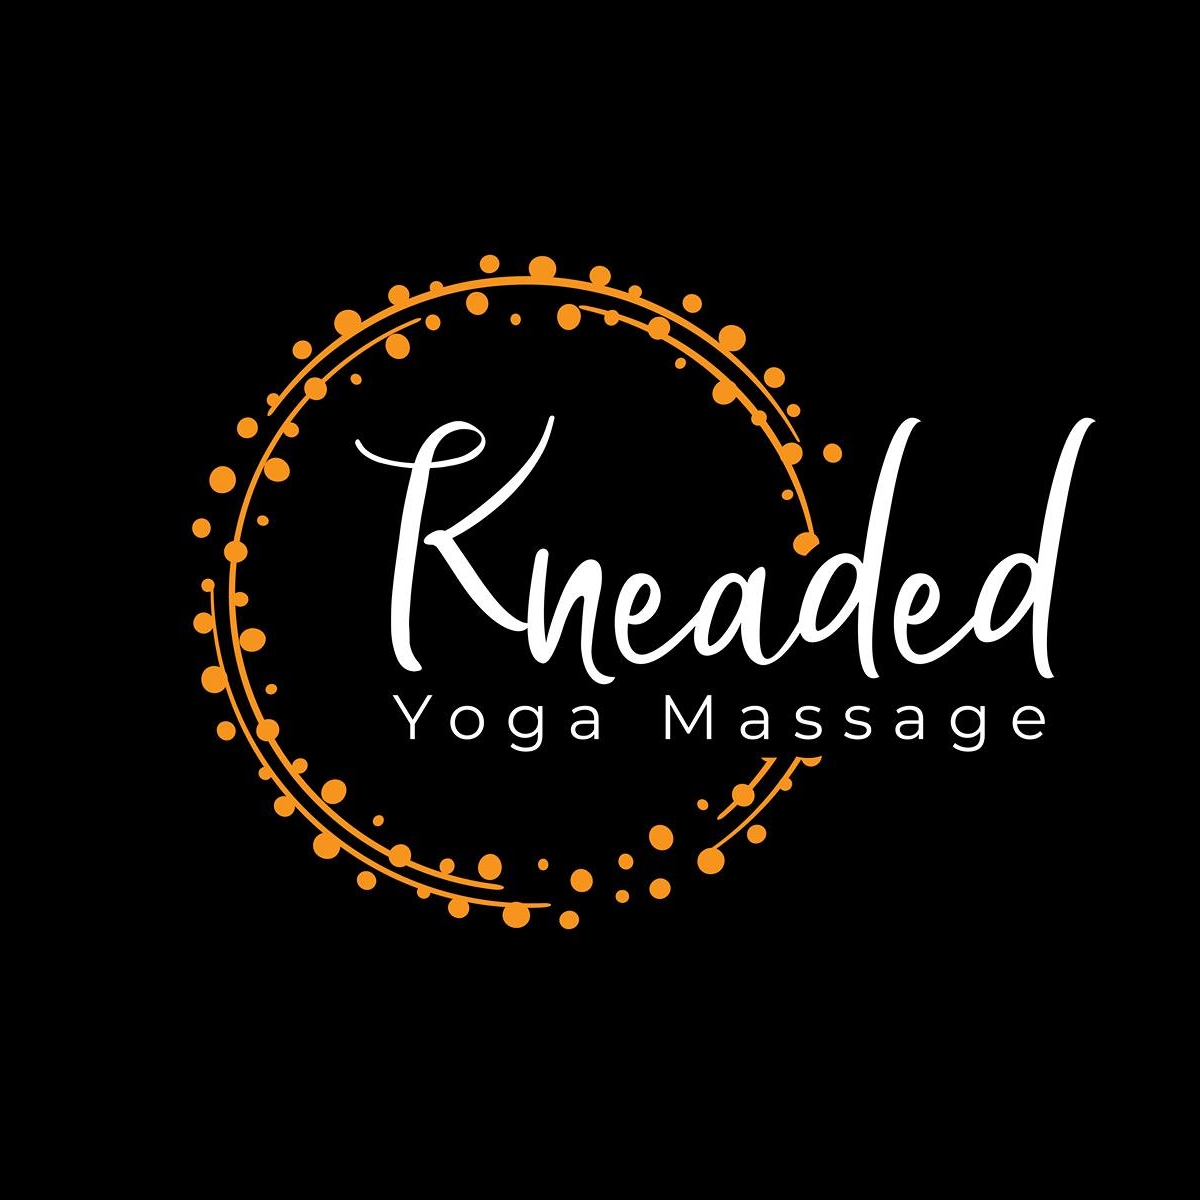 Kneaded Yoga 6620 Shallowford Rd #400, Lewisville North Carolina 27023